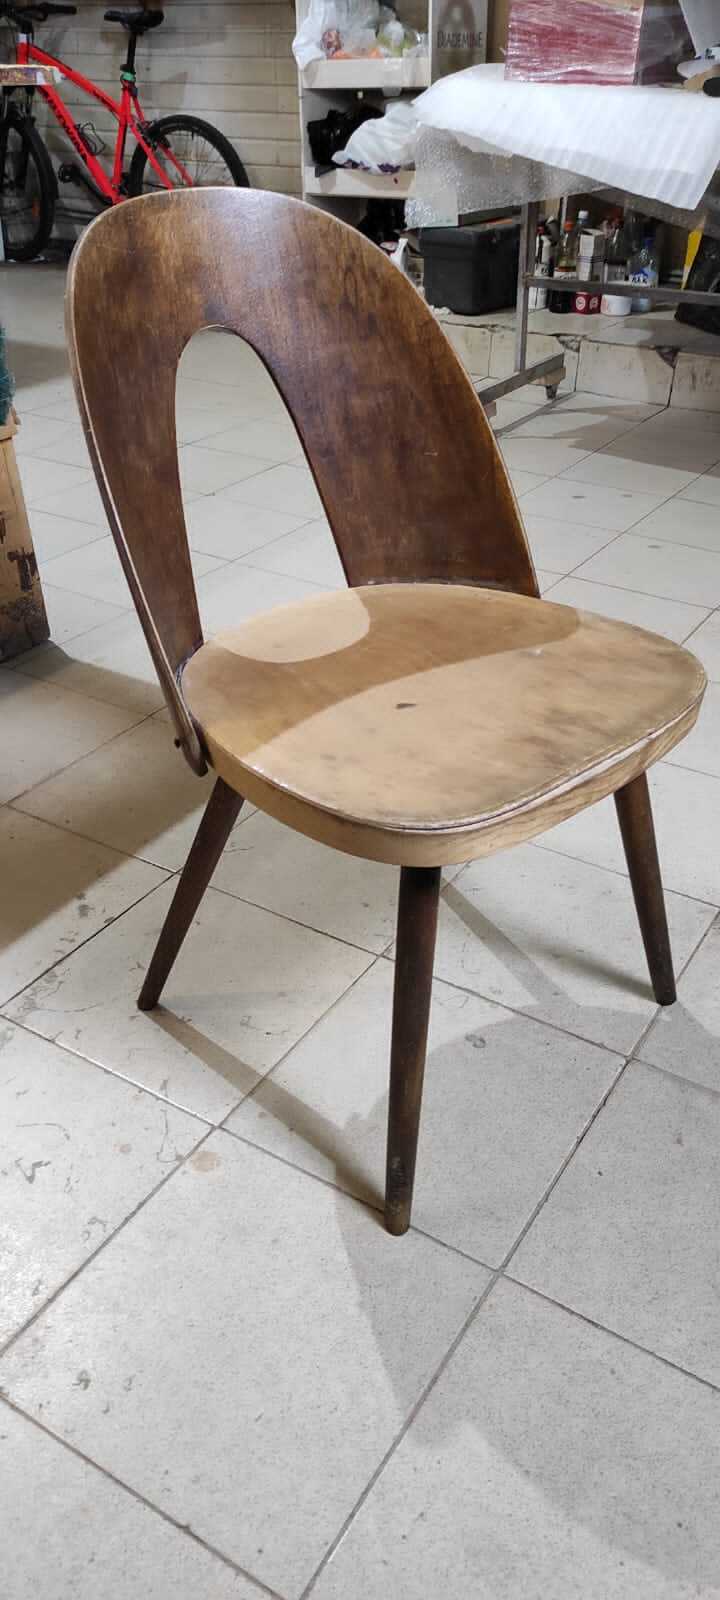 Как покрасить стул своими руками в технике декупаж. Покраска старого стула.